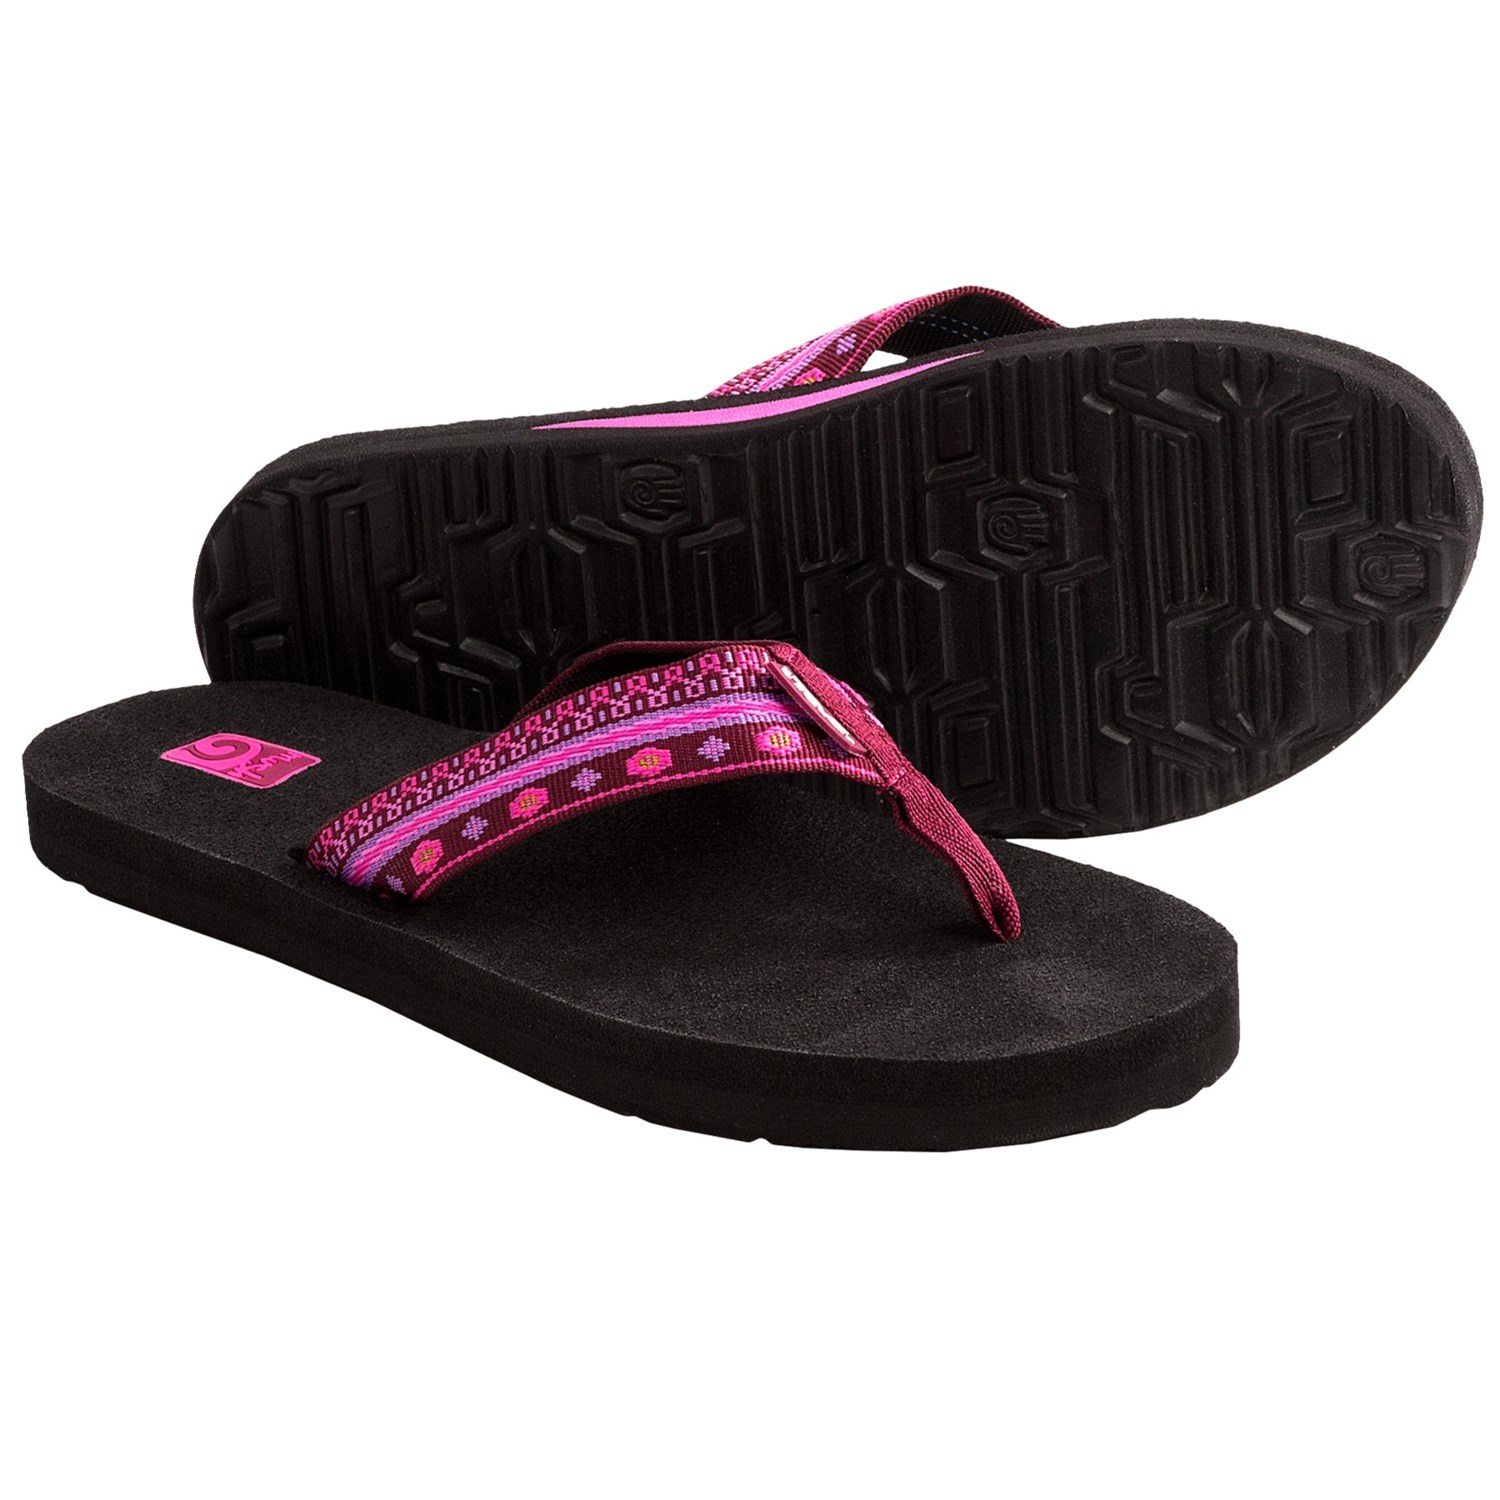 Teva Mush II Thong Sandals - Flip-Flops (For Women) in Hippie Pink